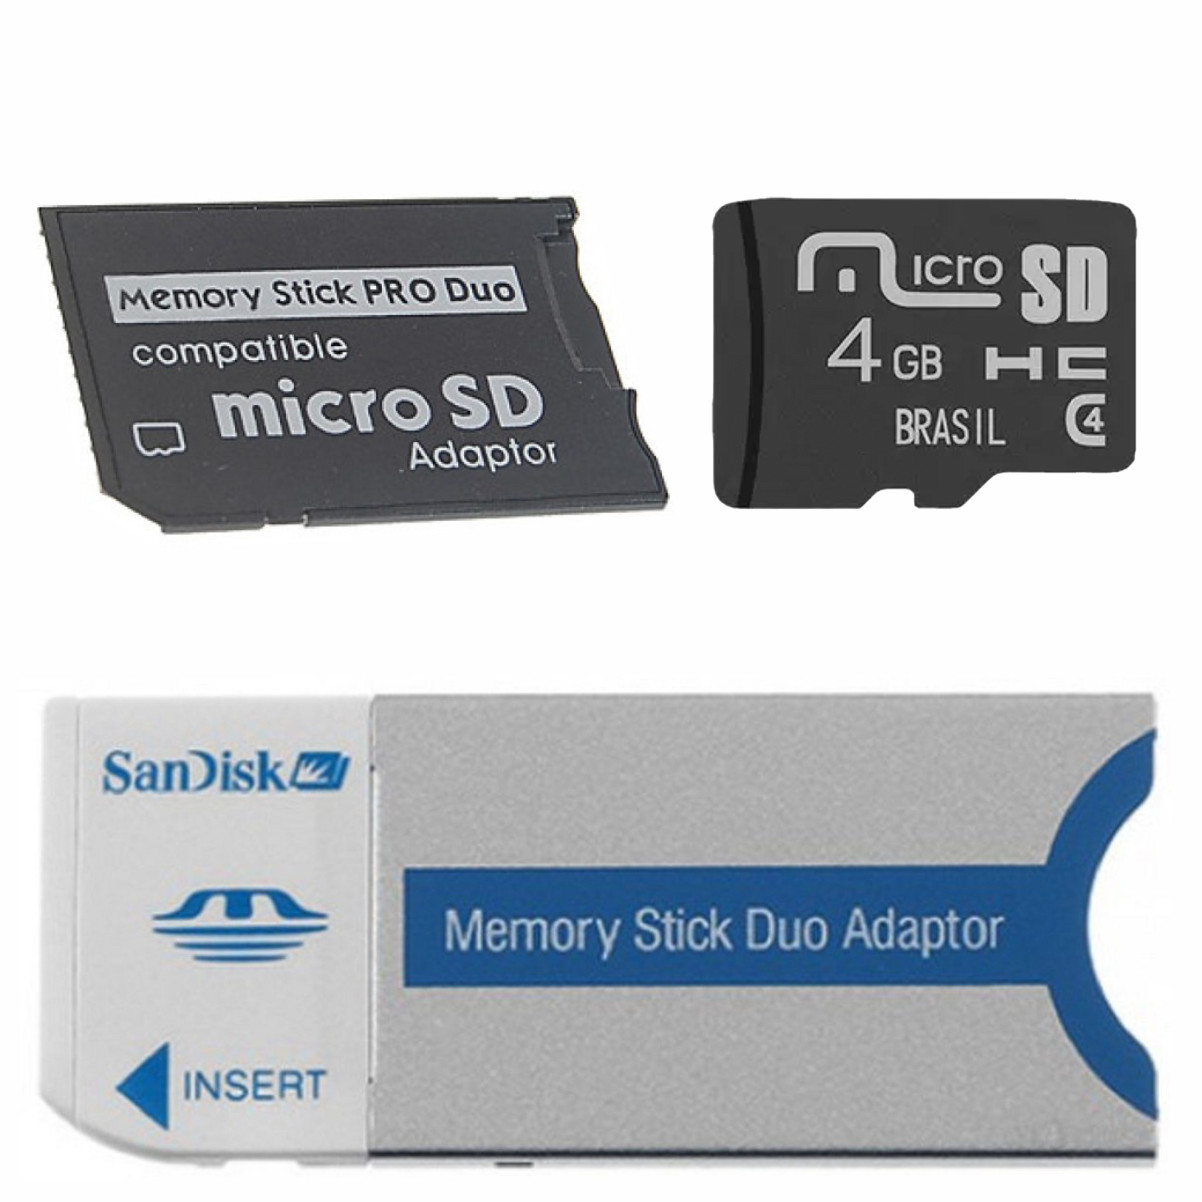 KIT MEMORYSTICK PRO DUO + ADAPTADOR PRO DUO + MICRO SDHC 4GB MULTILASER